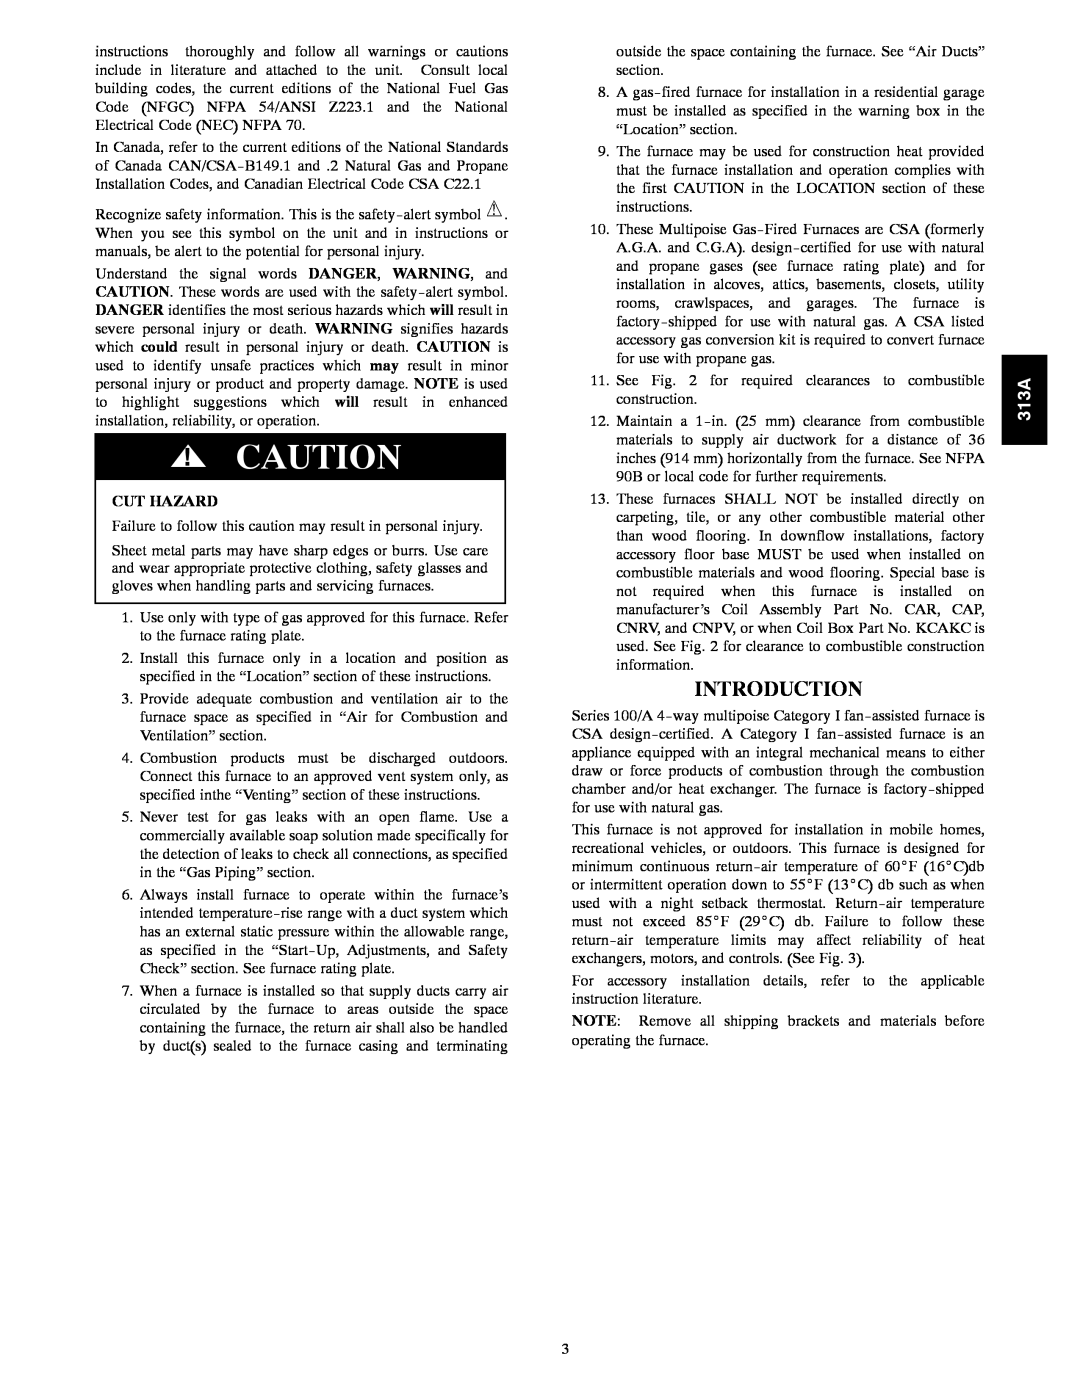 Bryant 313AAV instruction manual Introduction, Cut Hazard 